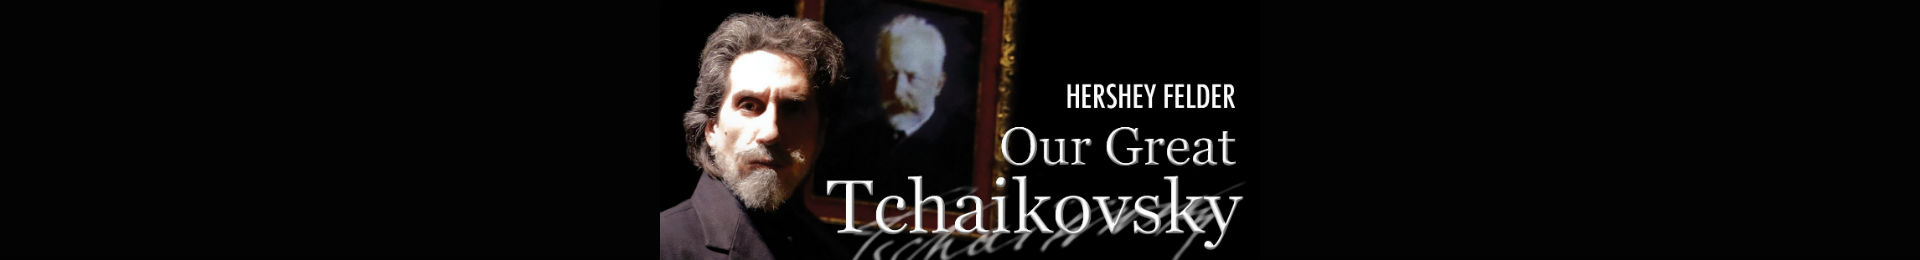 Our Great Tchaikowski tickets